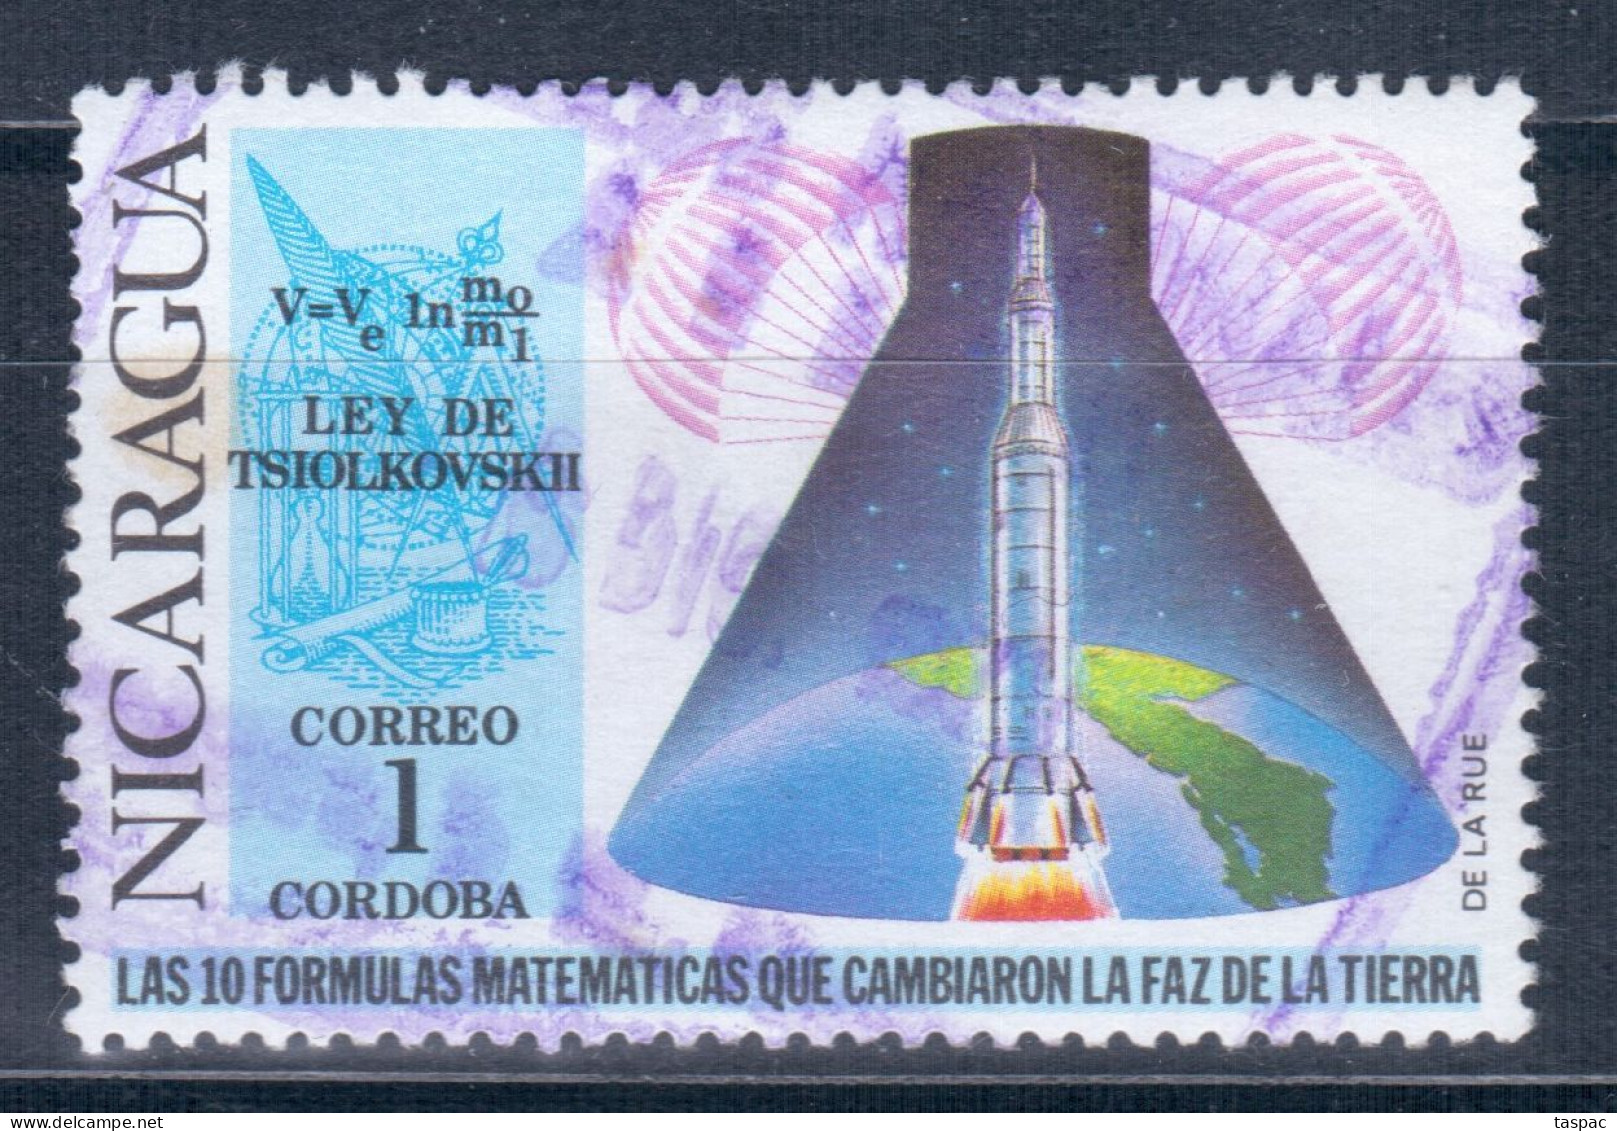 Nicaragua 1971 Mi# 1616 Used - Short Set - Tsiolkovski's Law (speed Of Rockets) / Space - North  America